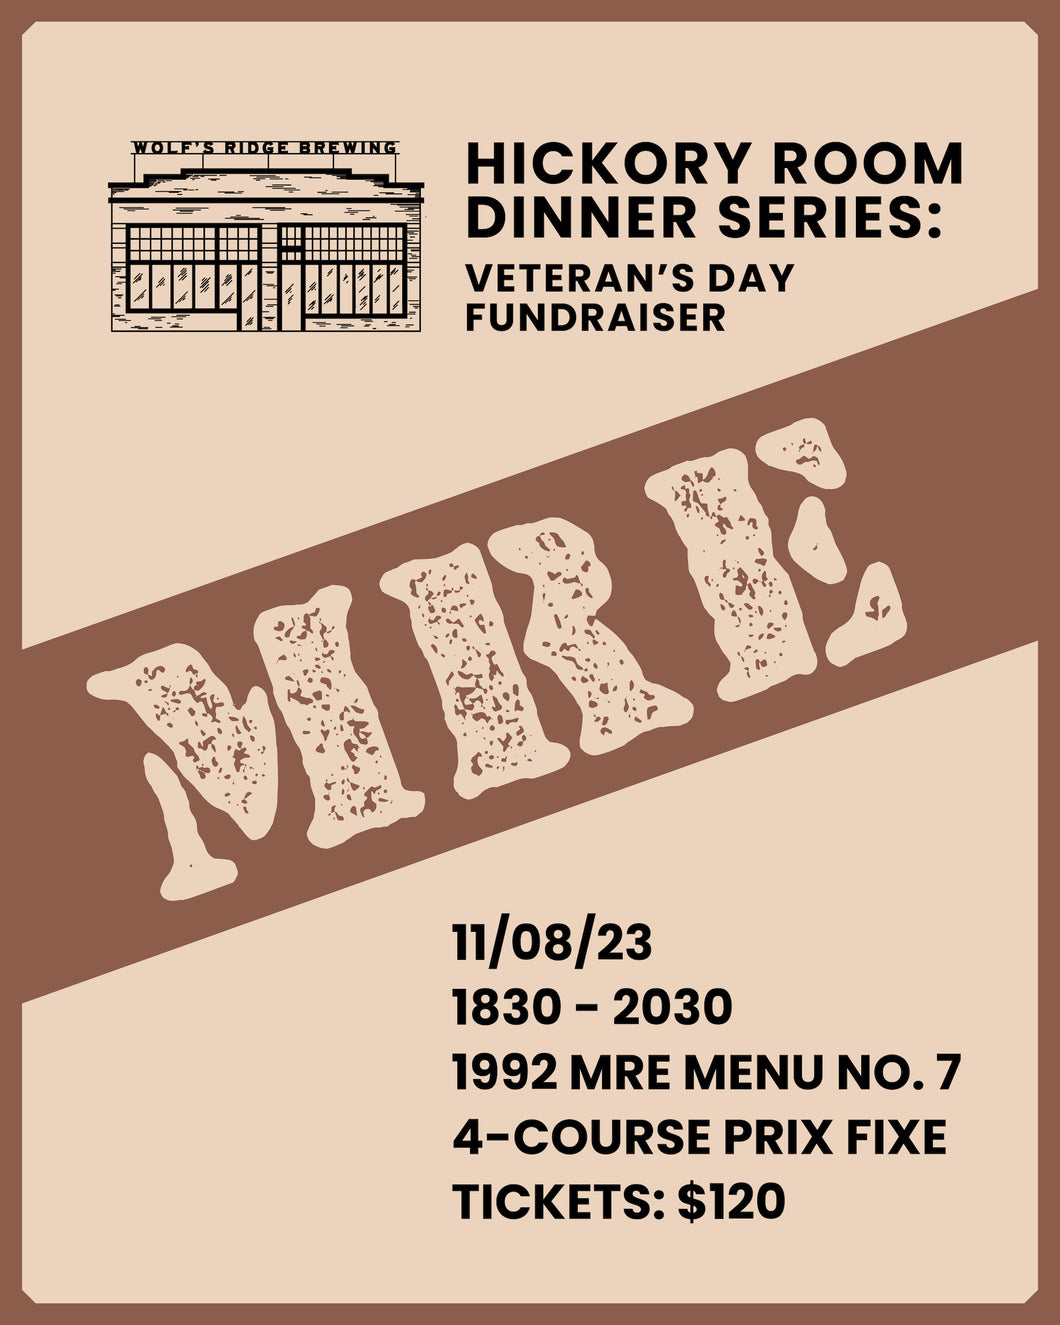 Hickory Room Dinner Series: Veteran's Day Fundraiser